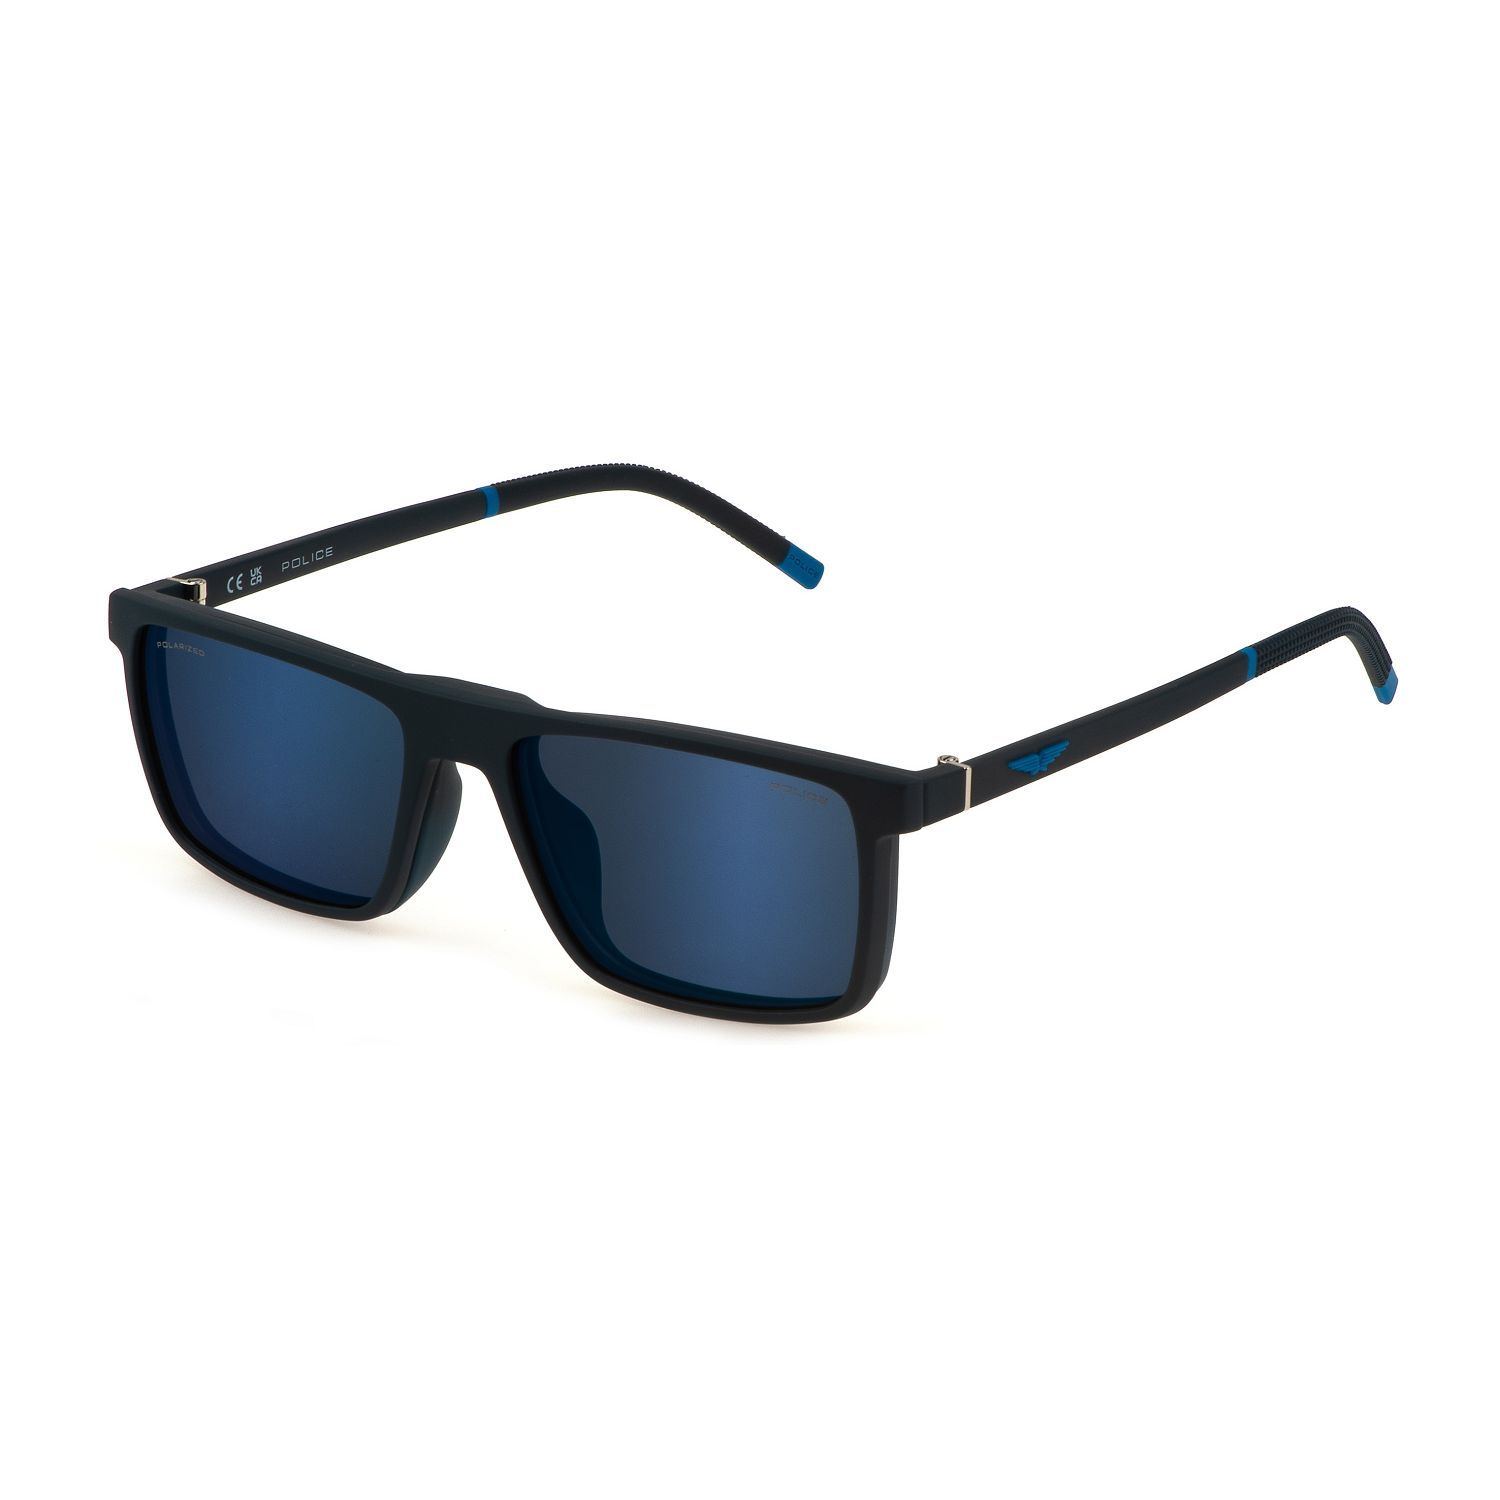 UPLL74M Square Sunglasses ABIP - size 54